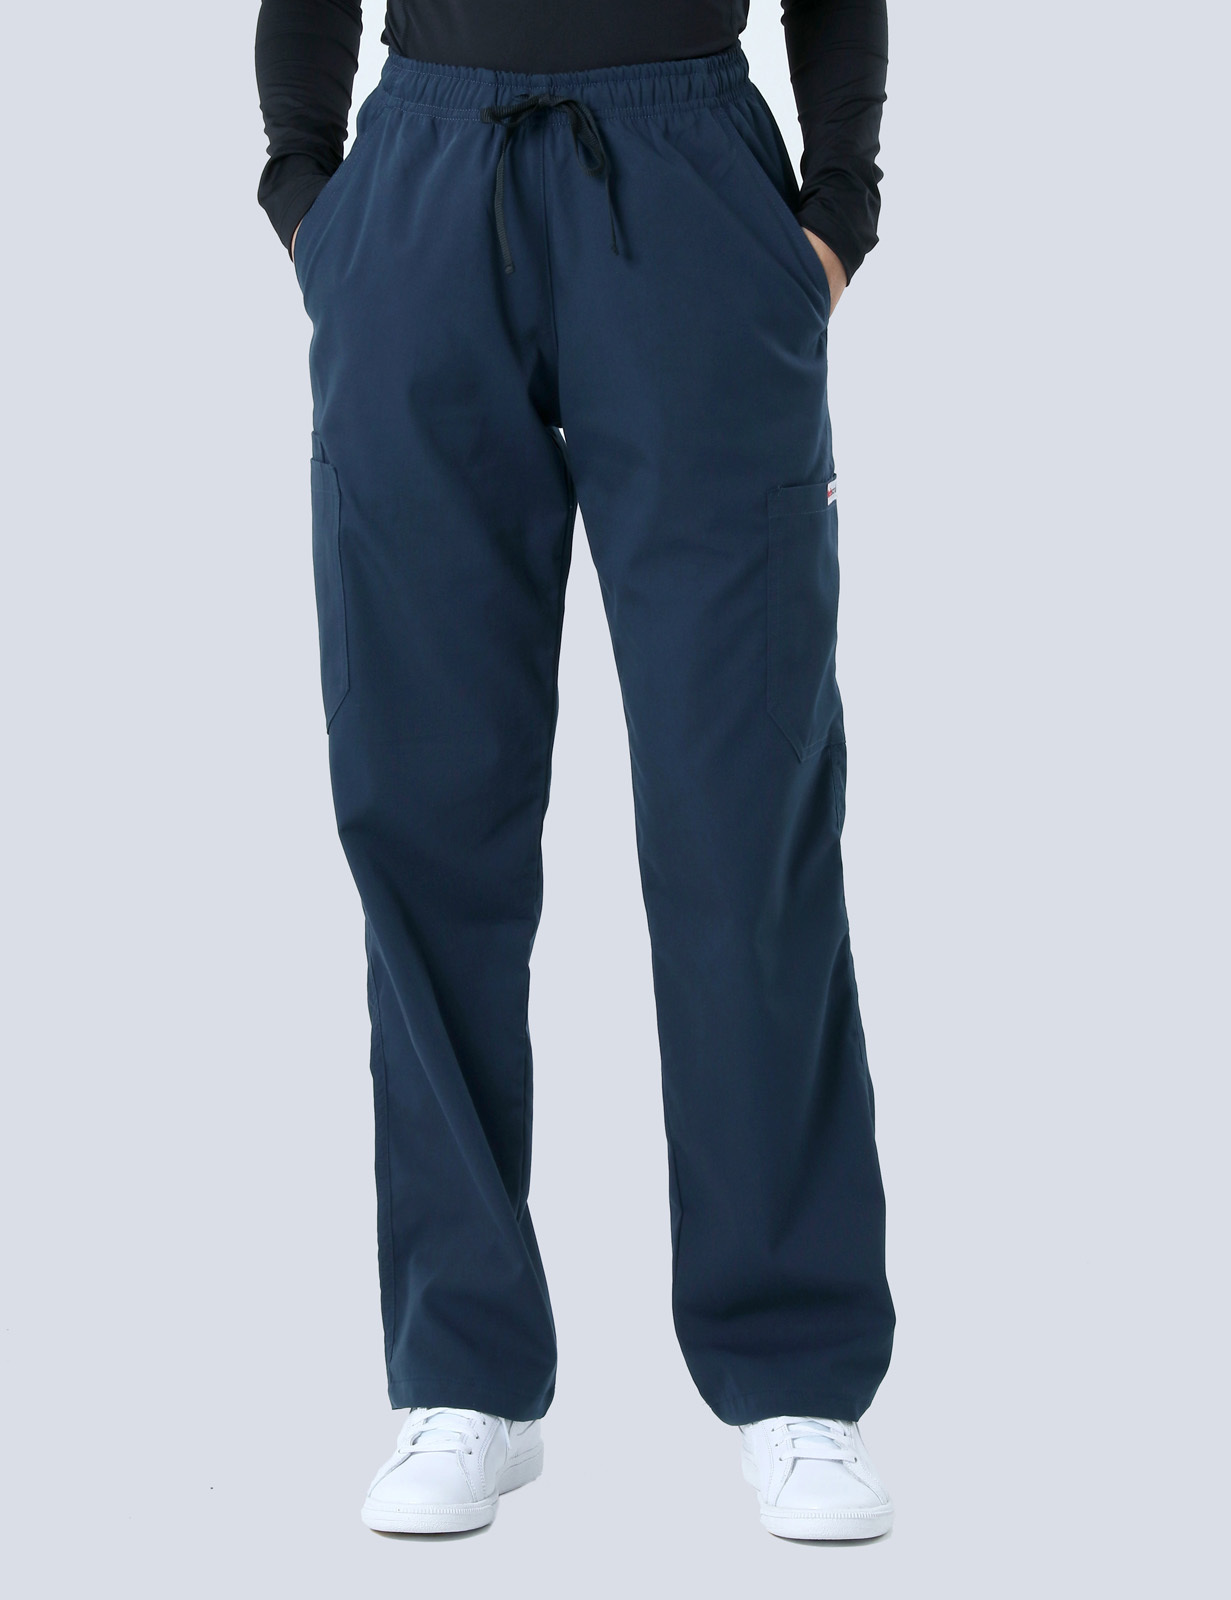 Women's Cargo Performance Pants - Navy - 2X Large